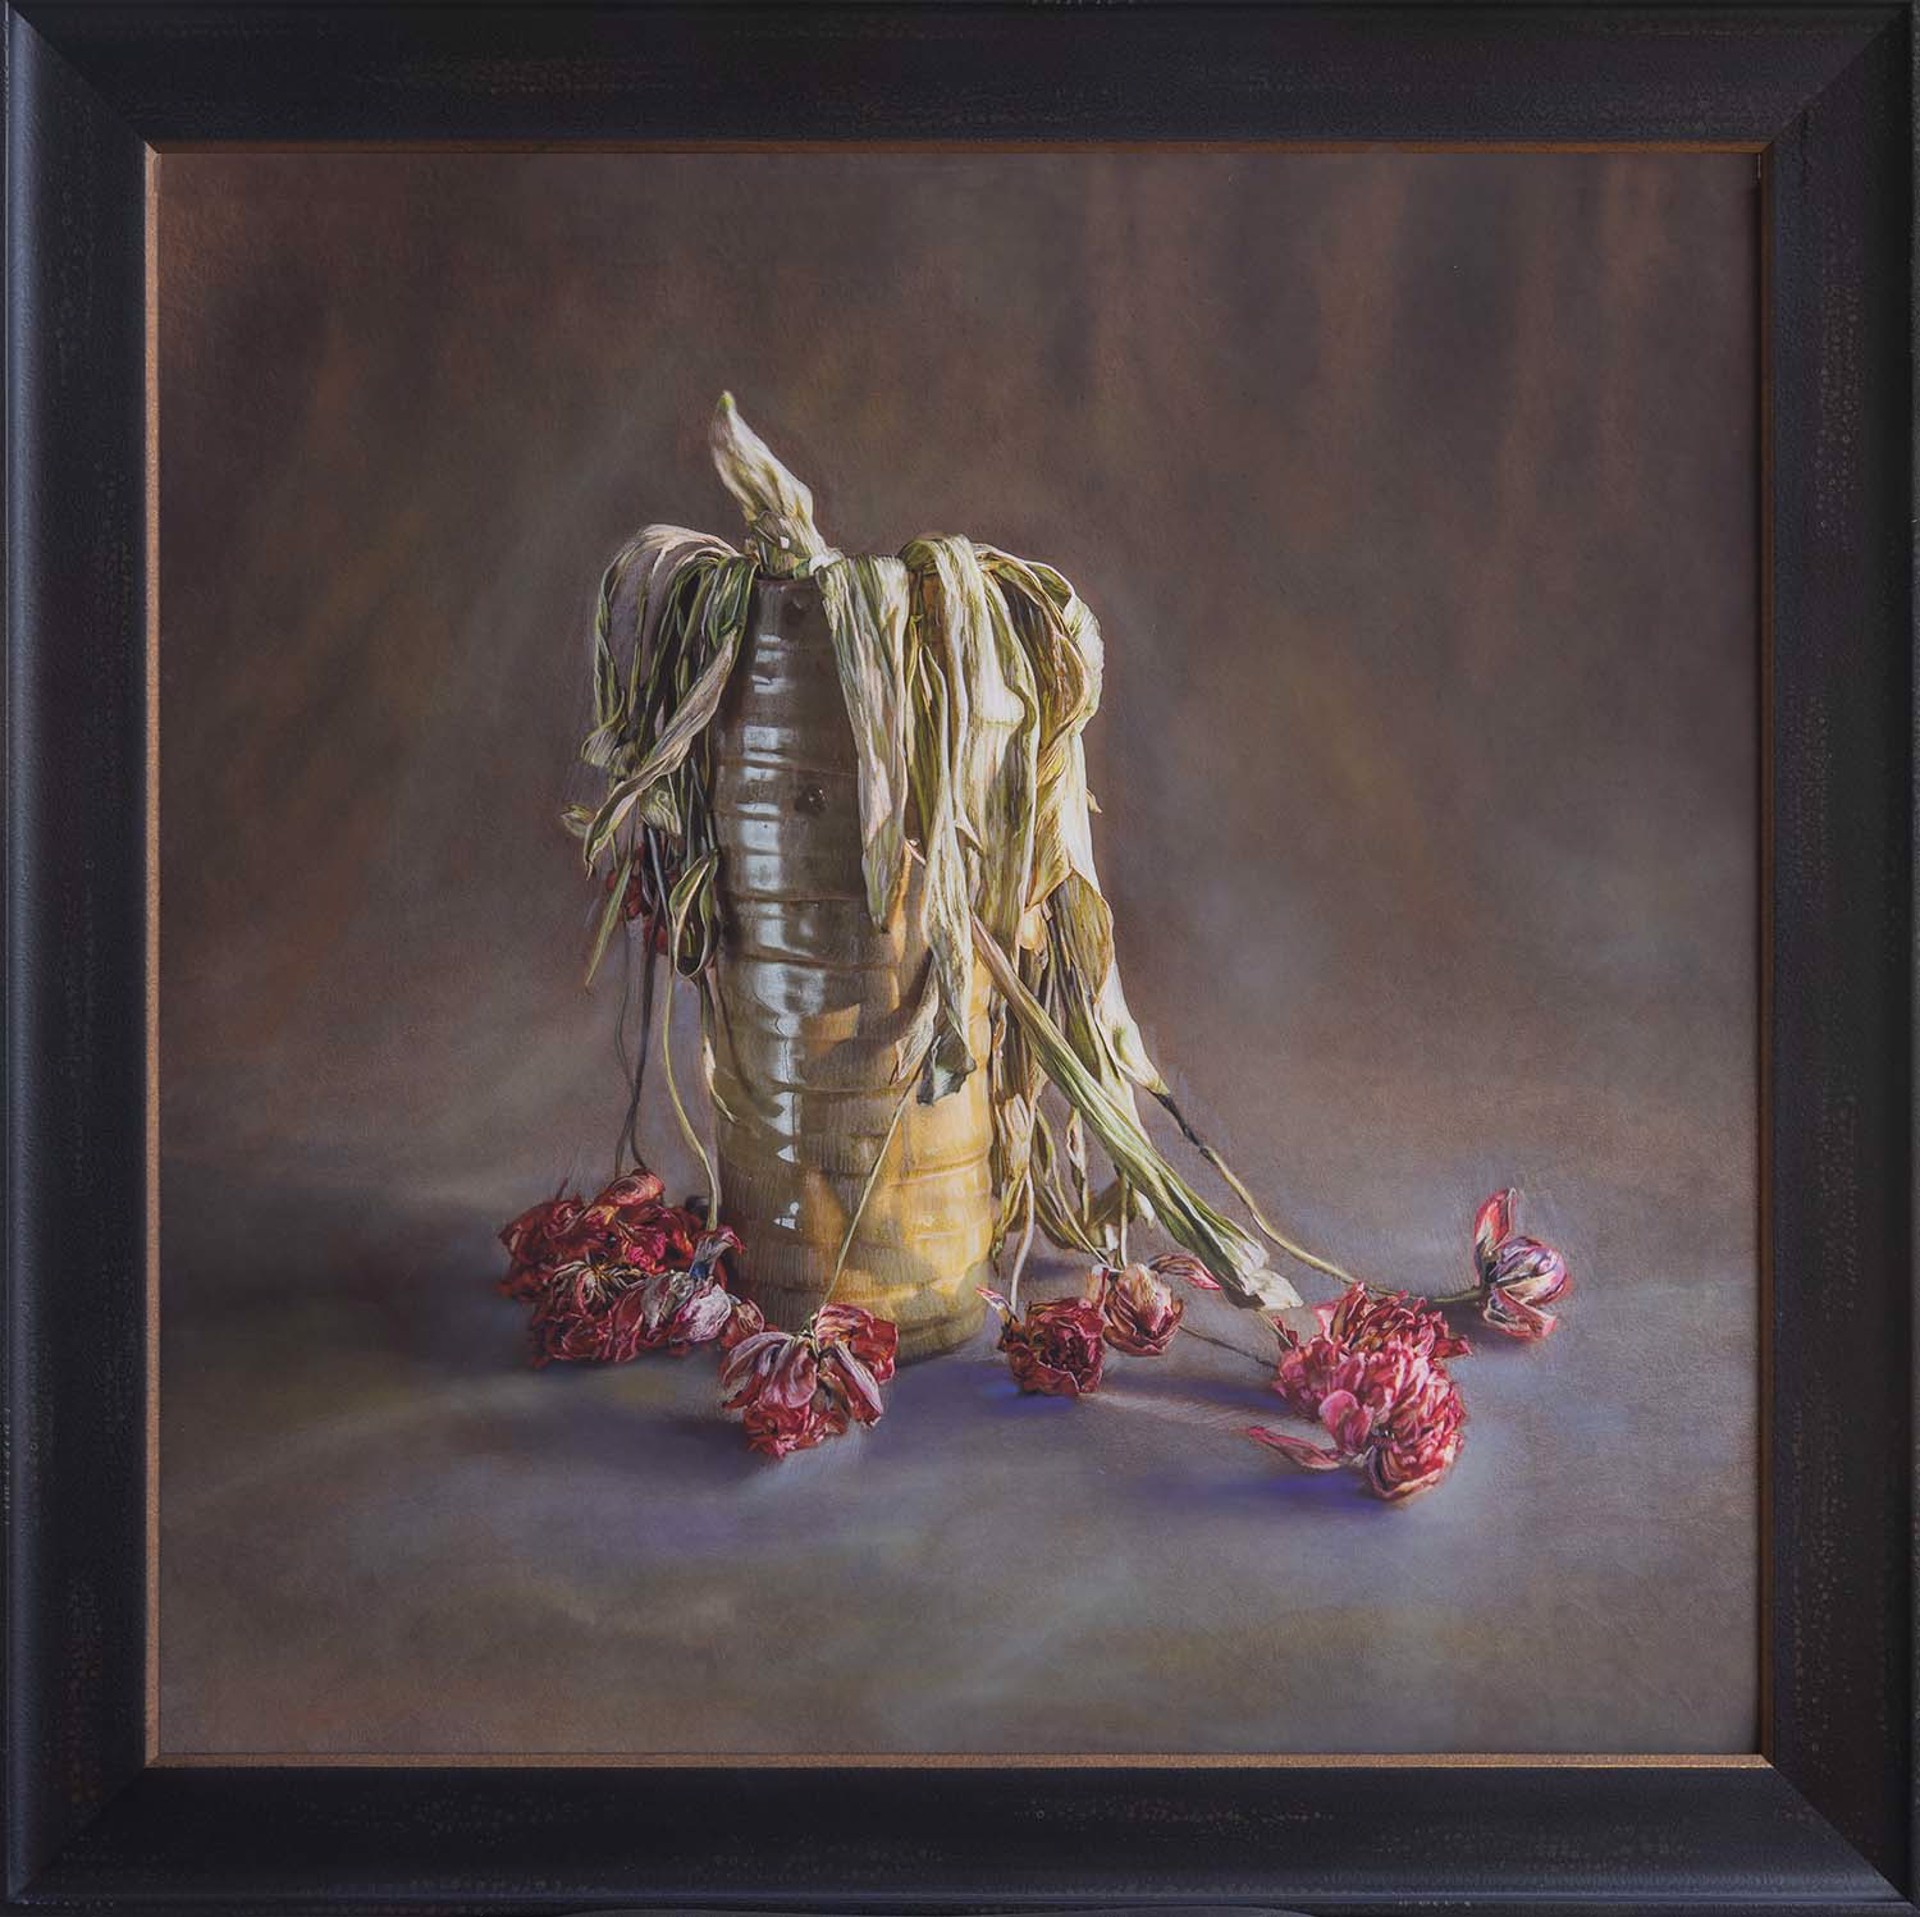 Patricia's Dead Tulips by Kate Breakey